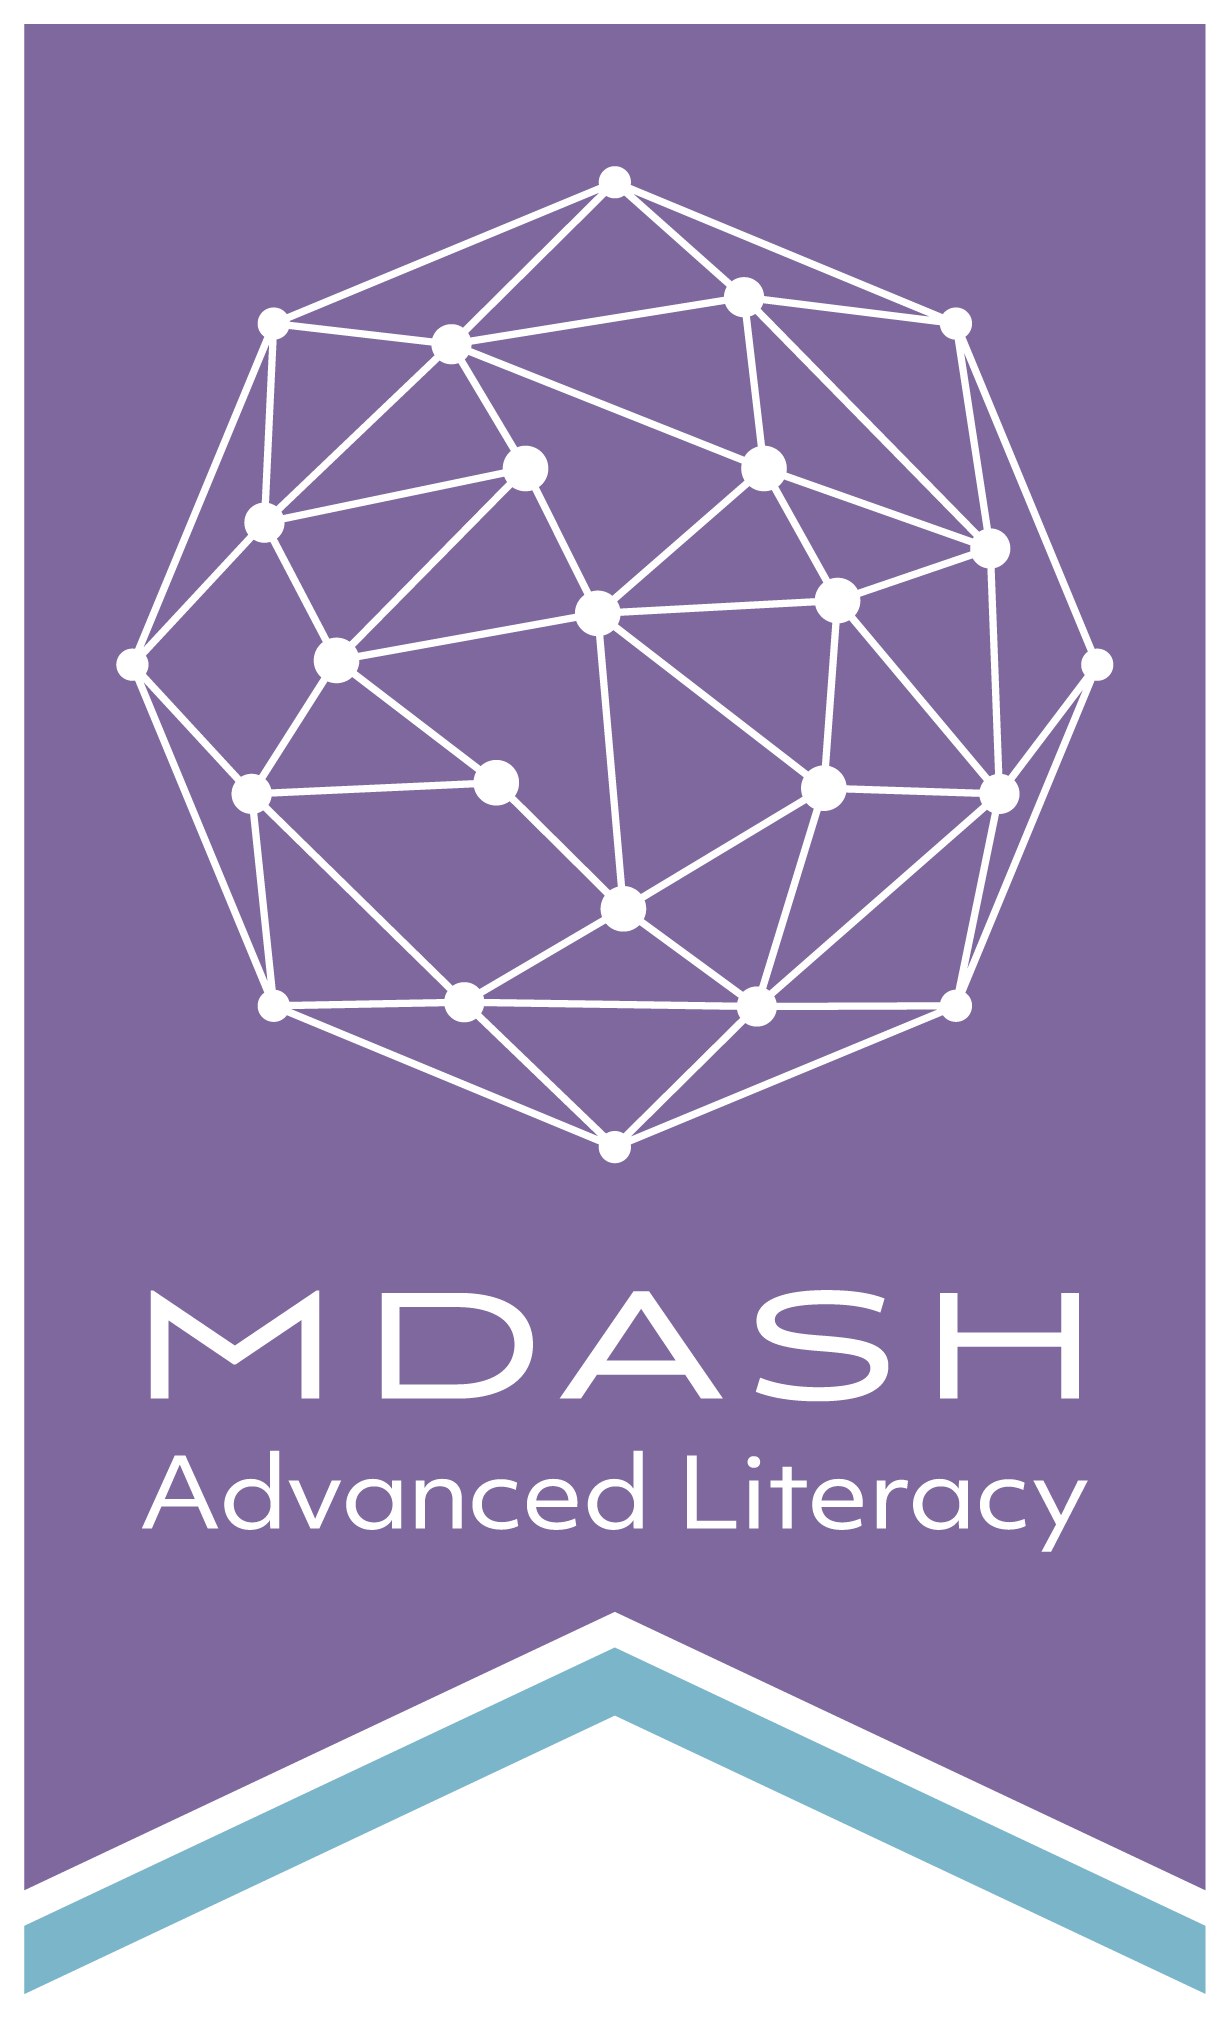 MDASH_logo